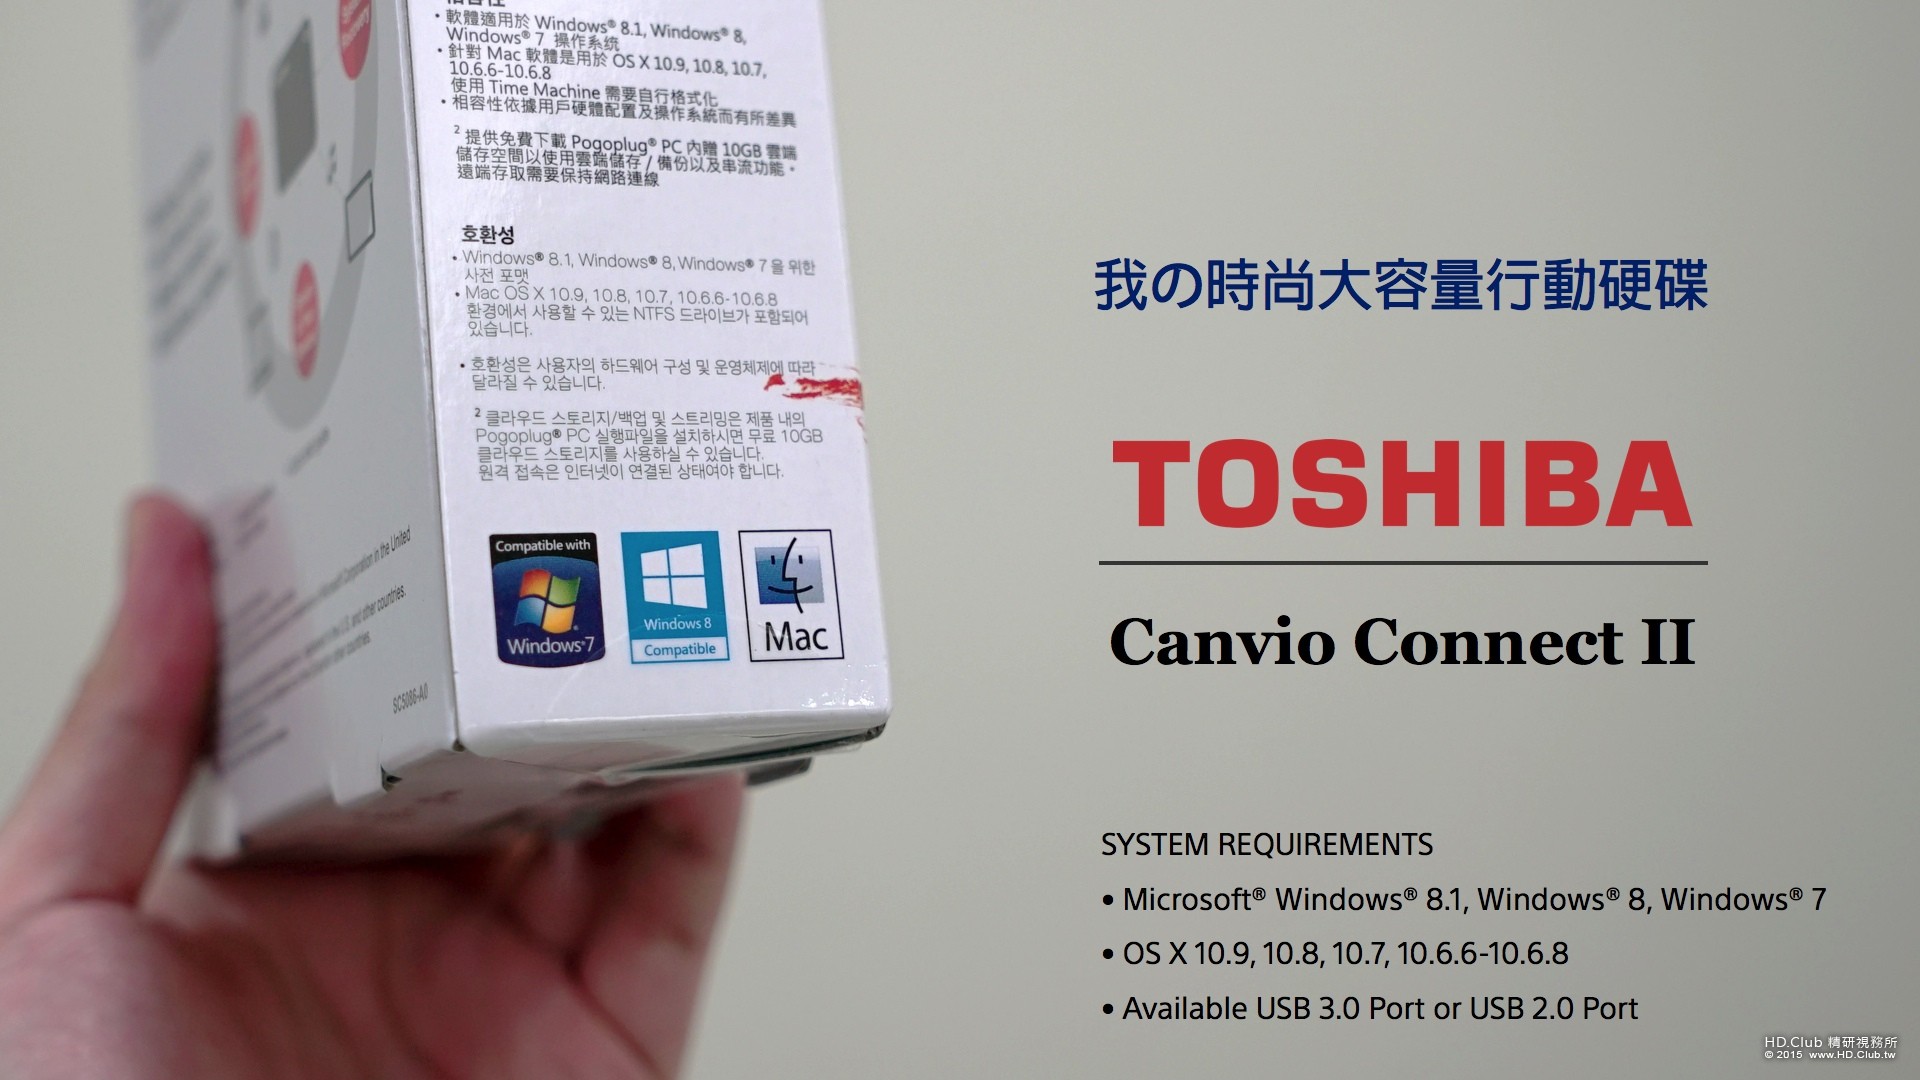 TOSHIBA Canvio Connect II